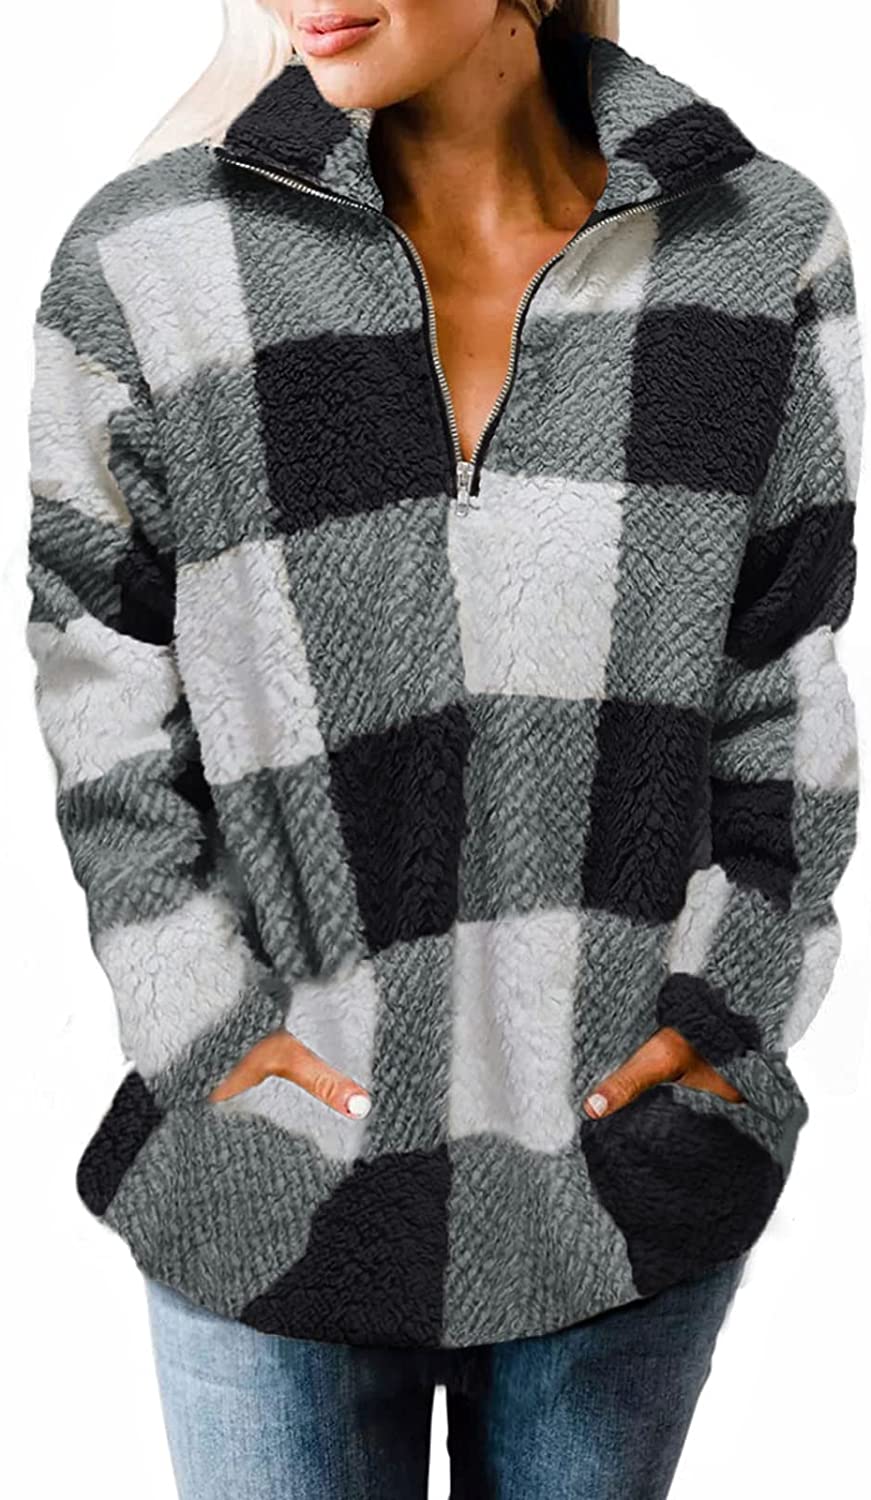 ZESICA Women's Plaid Long Sleeve Zipper Sherpa Fleece Sweatshirt Pullover Jacket Coat with Pockets